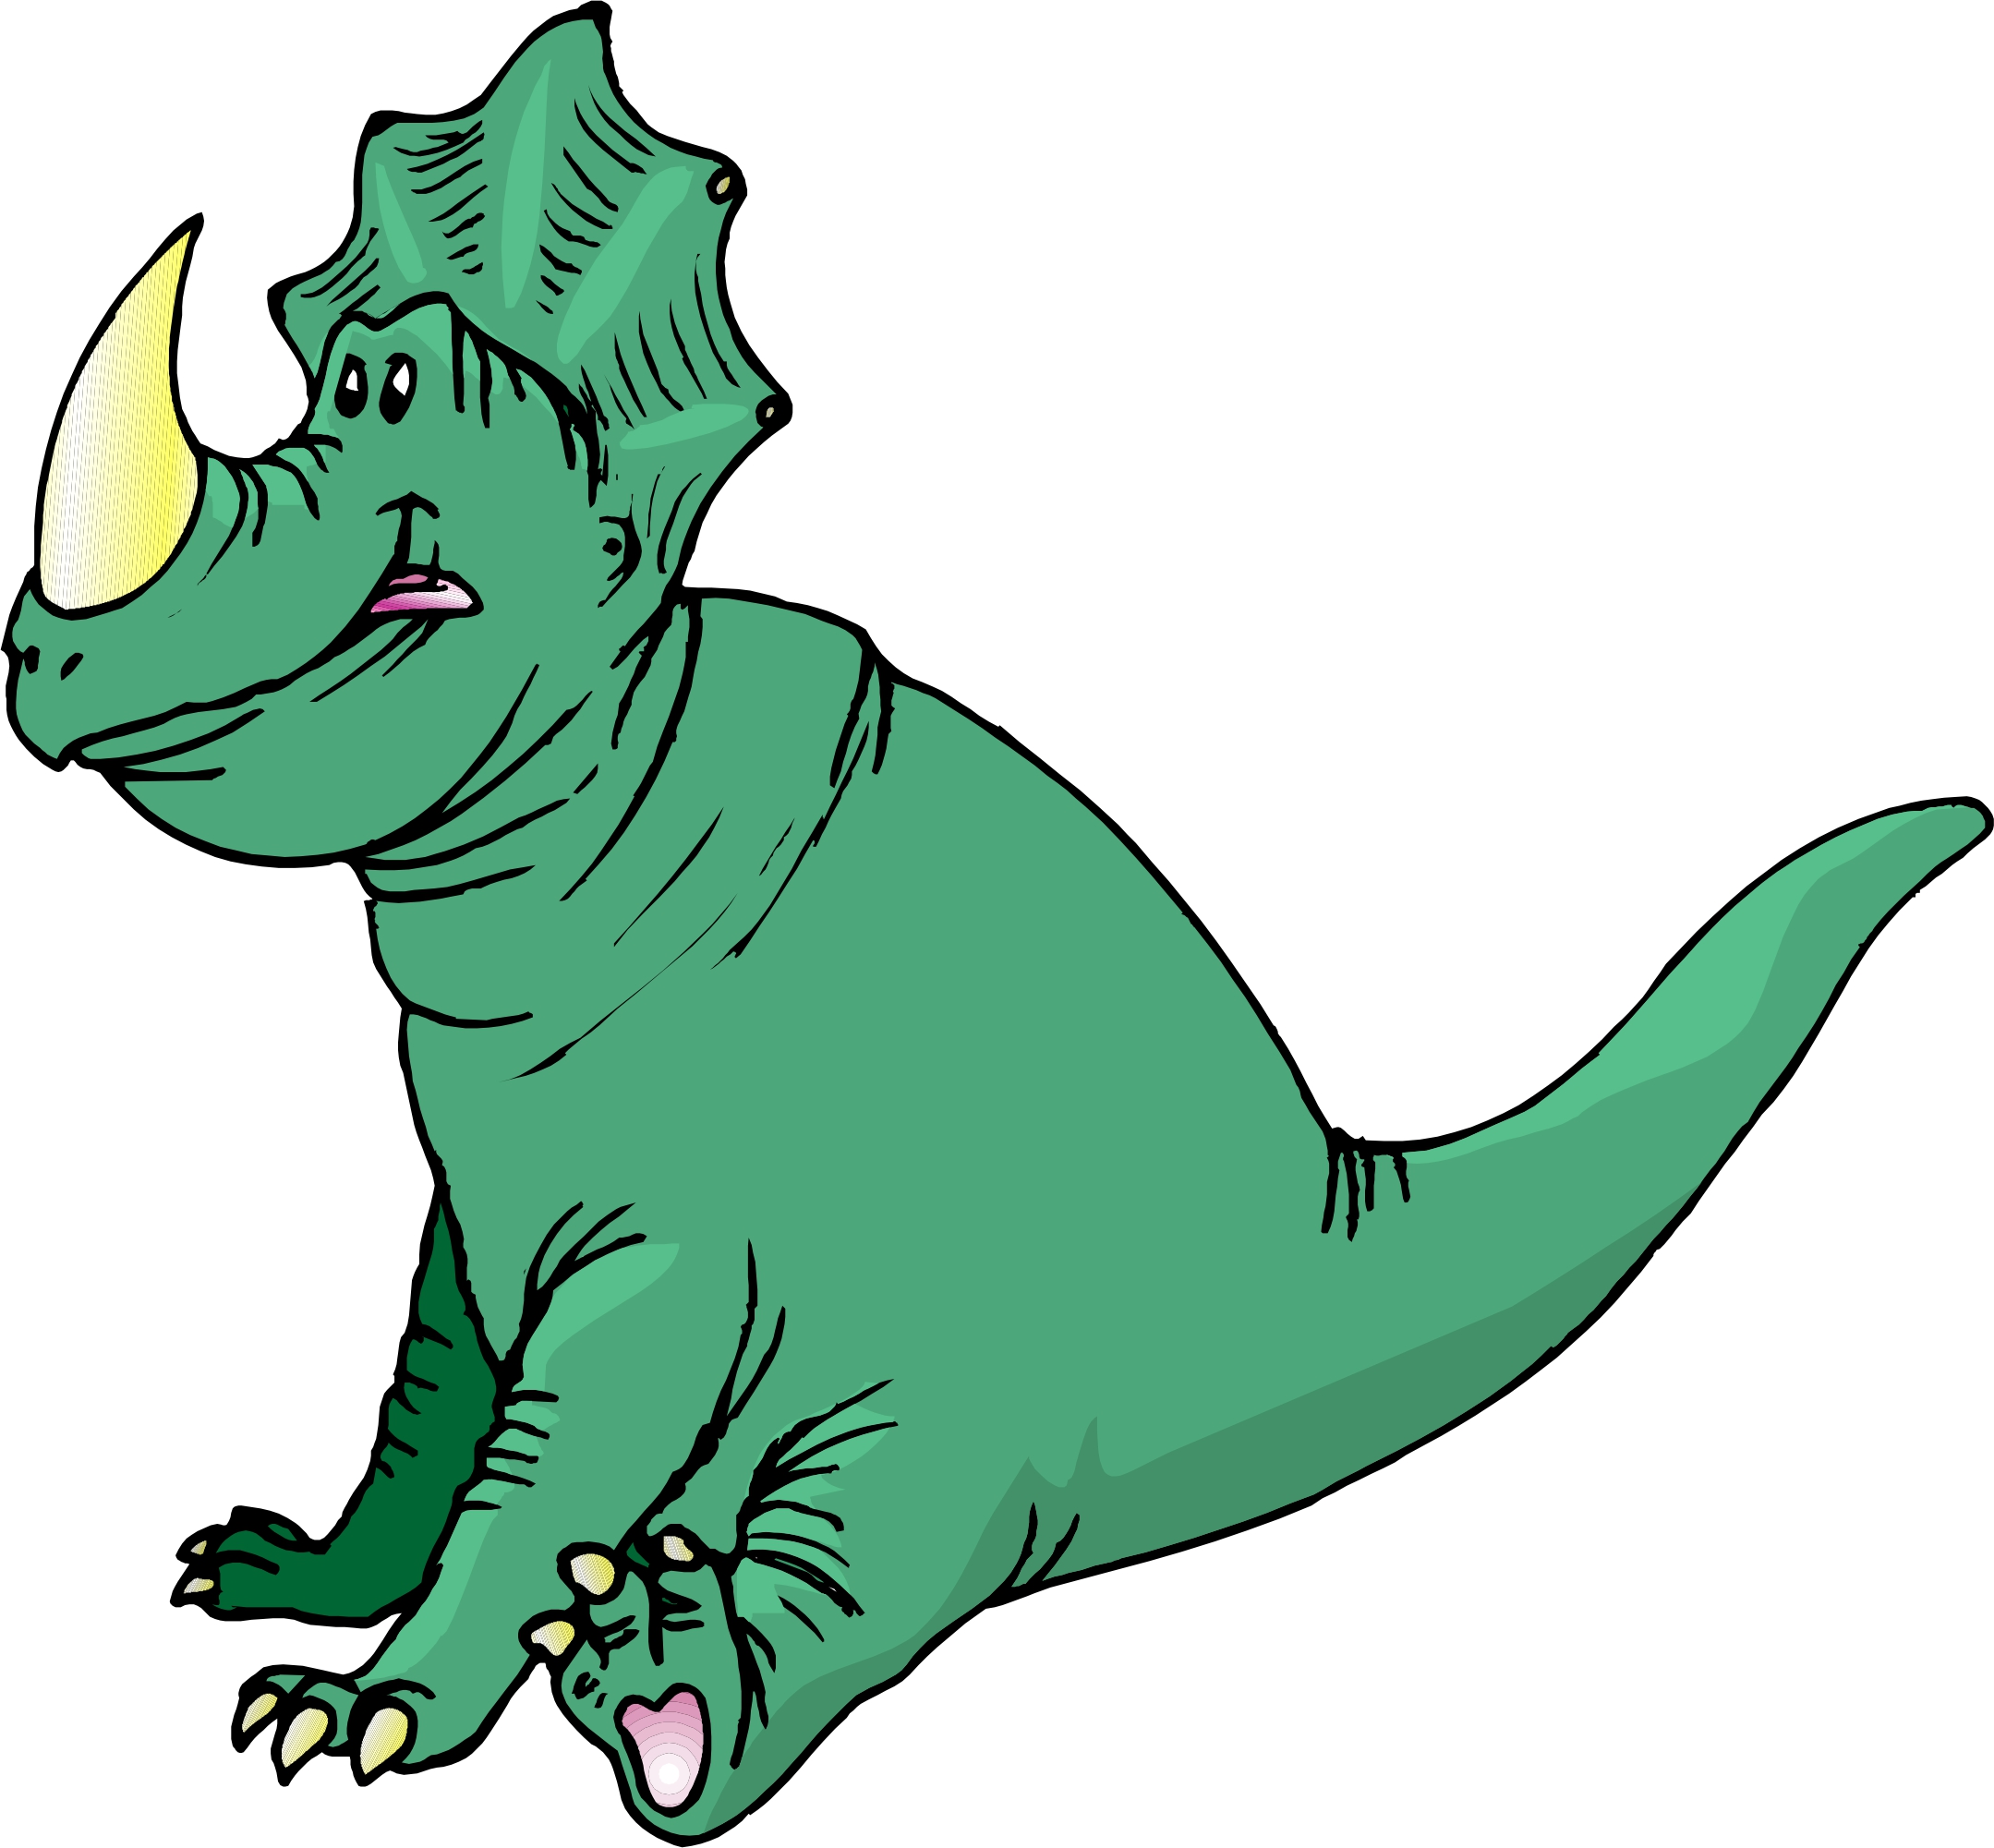 Dinosaur Cartoon Pictures